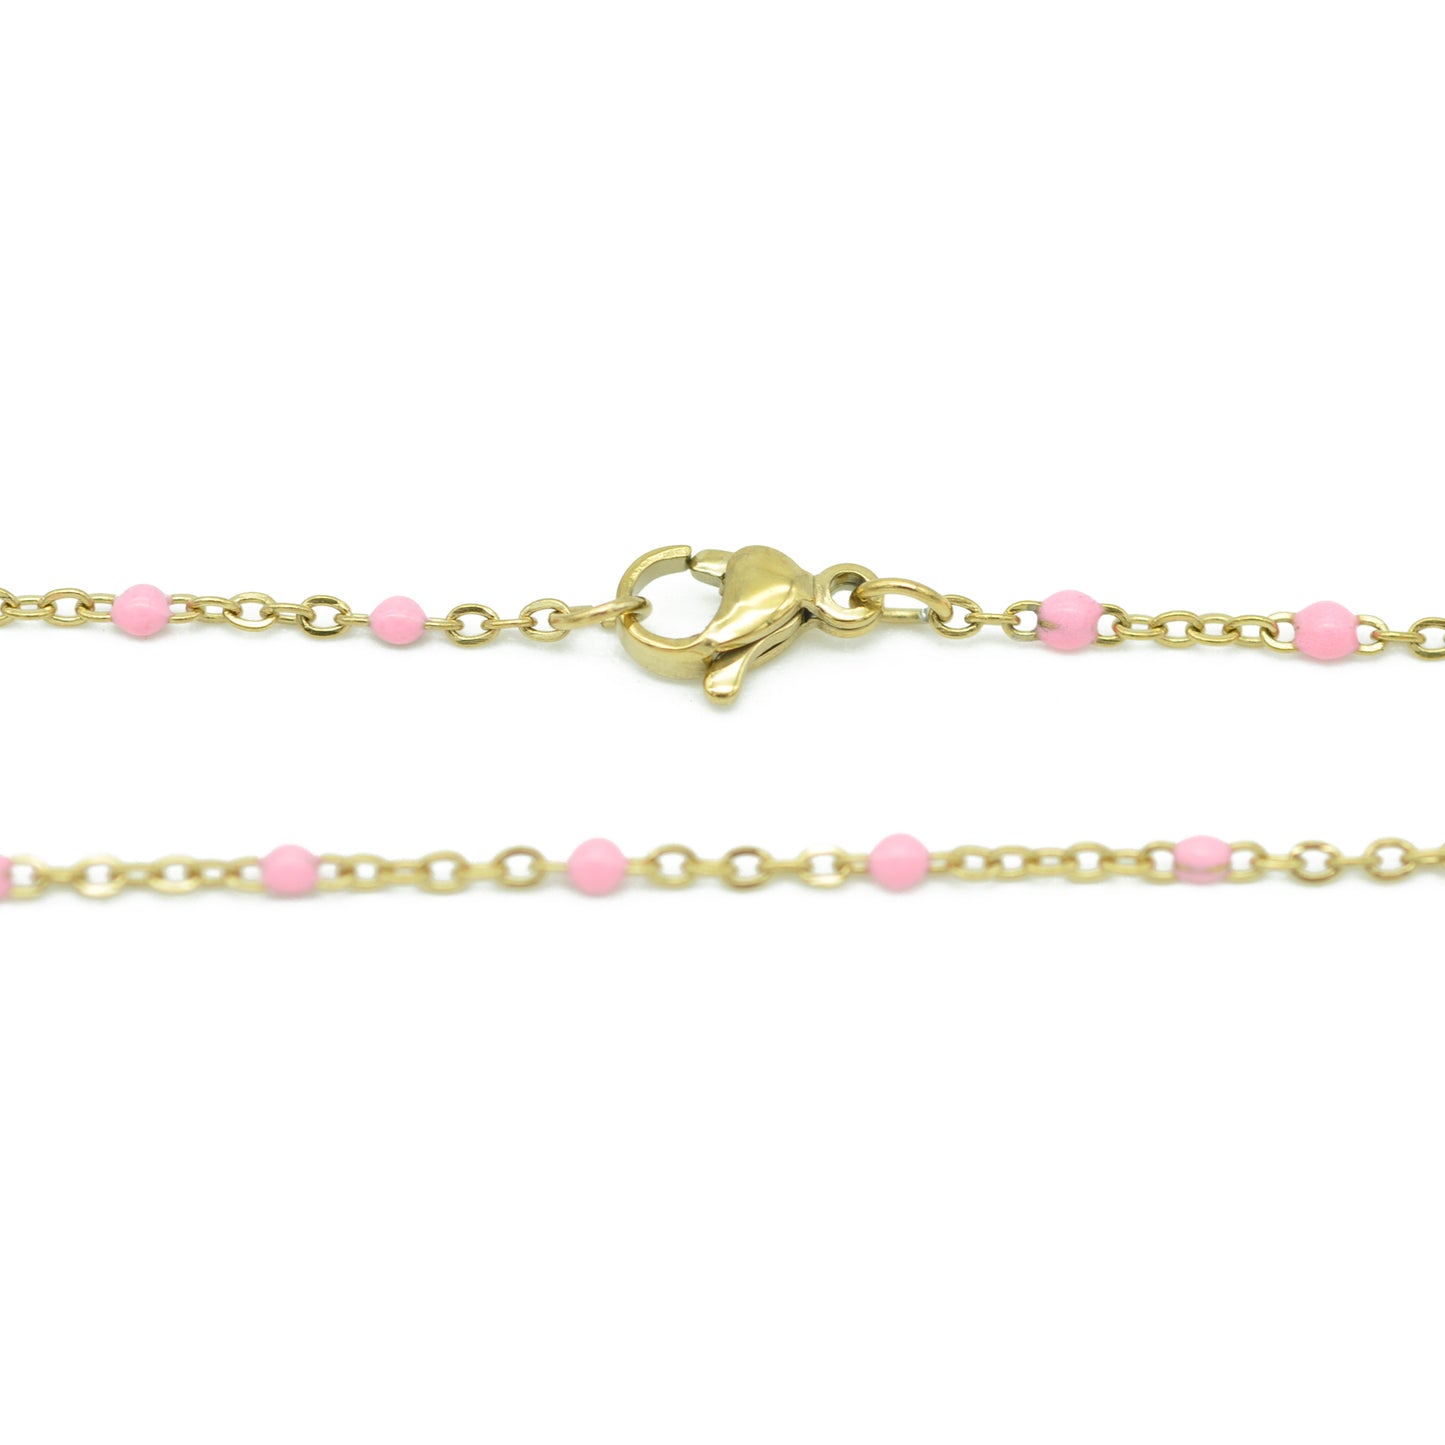 Edelstahl Kette mit Kügelchen / rosa emailliert / vergoldet / 45 cm